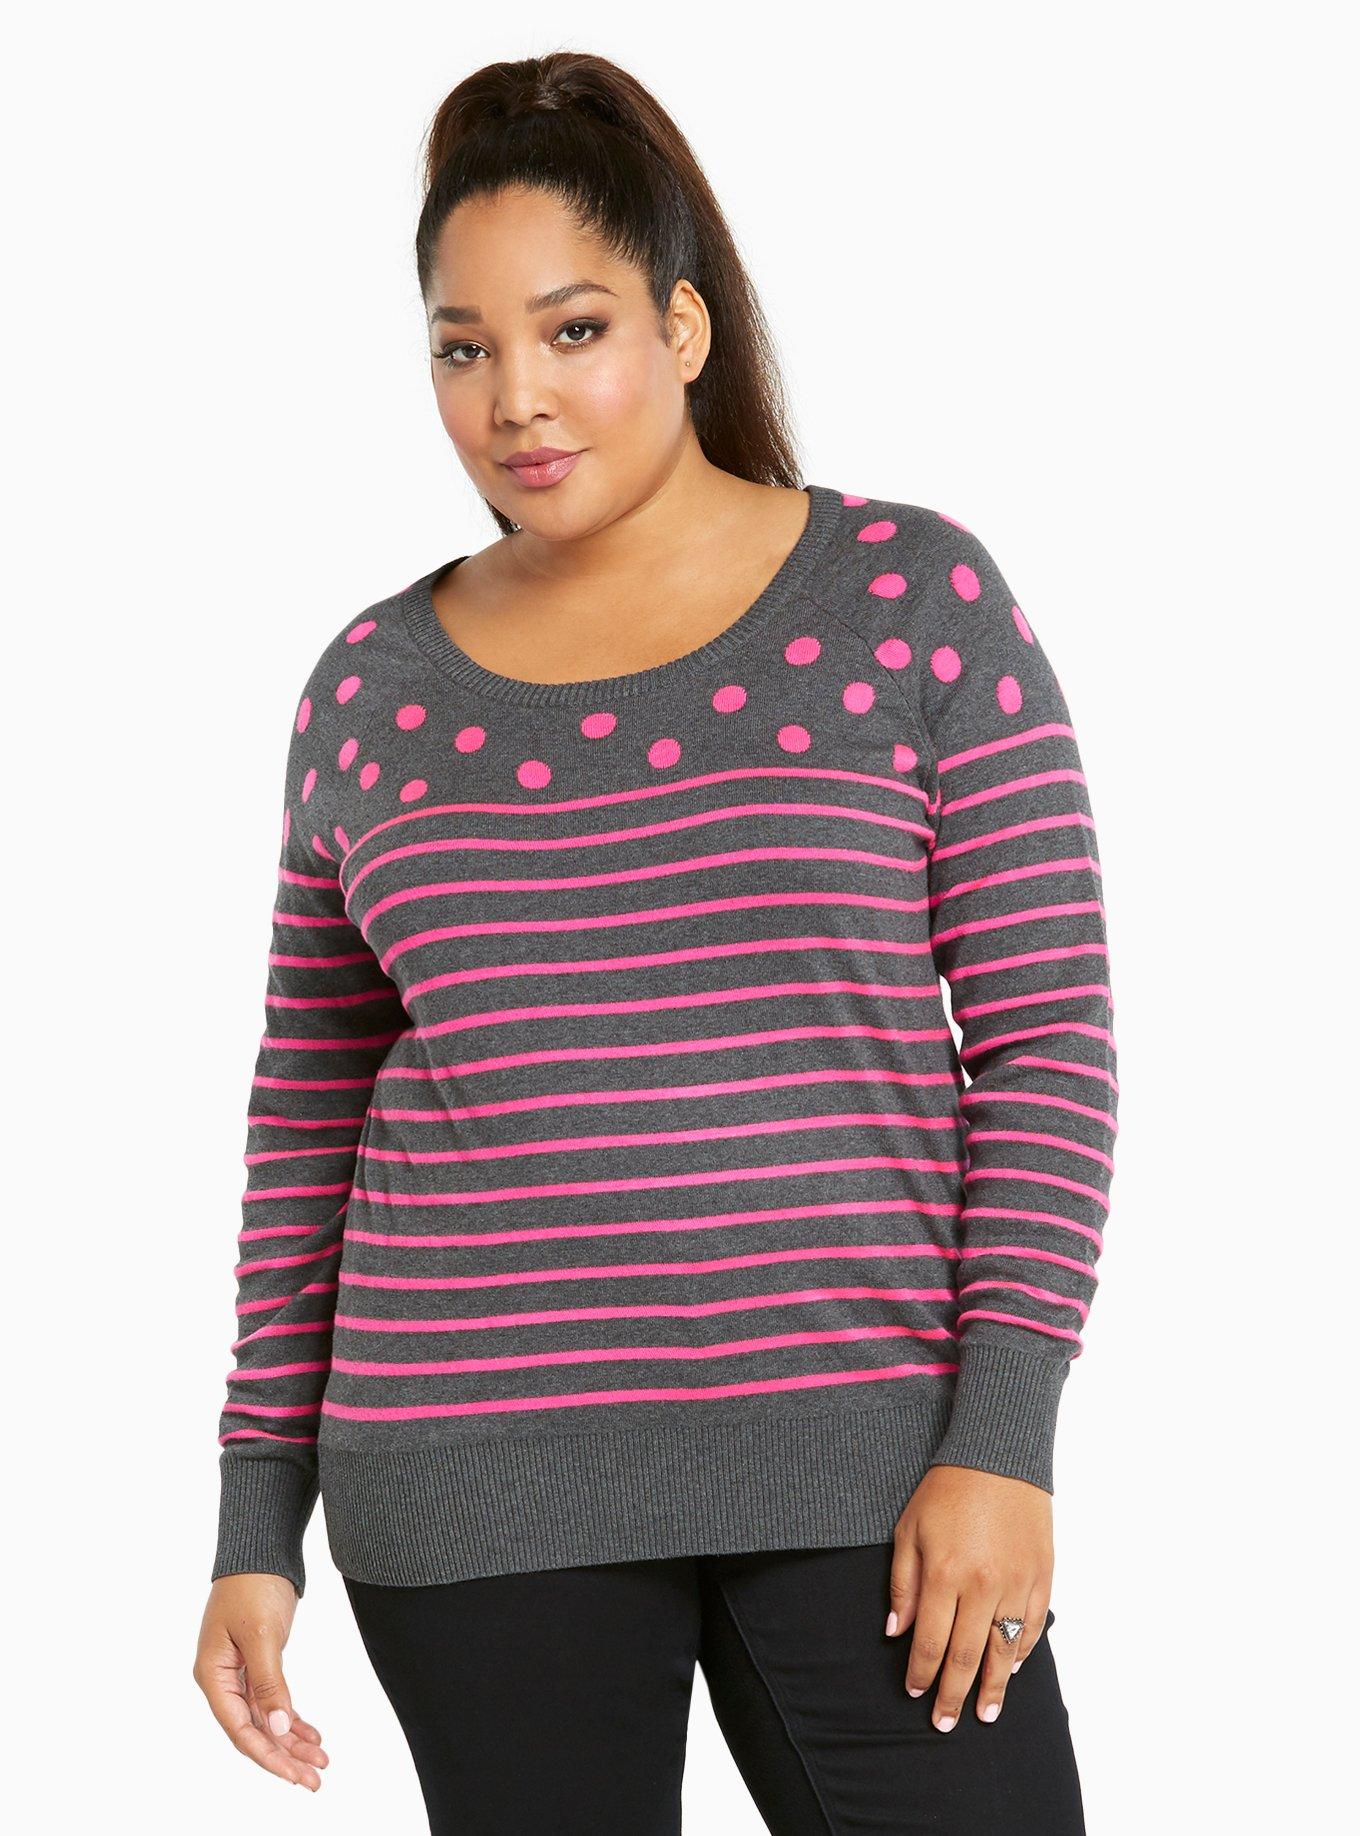 Plus Size - Polka Dot Striped Sweater - Torrid